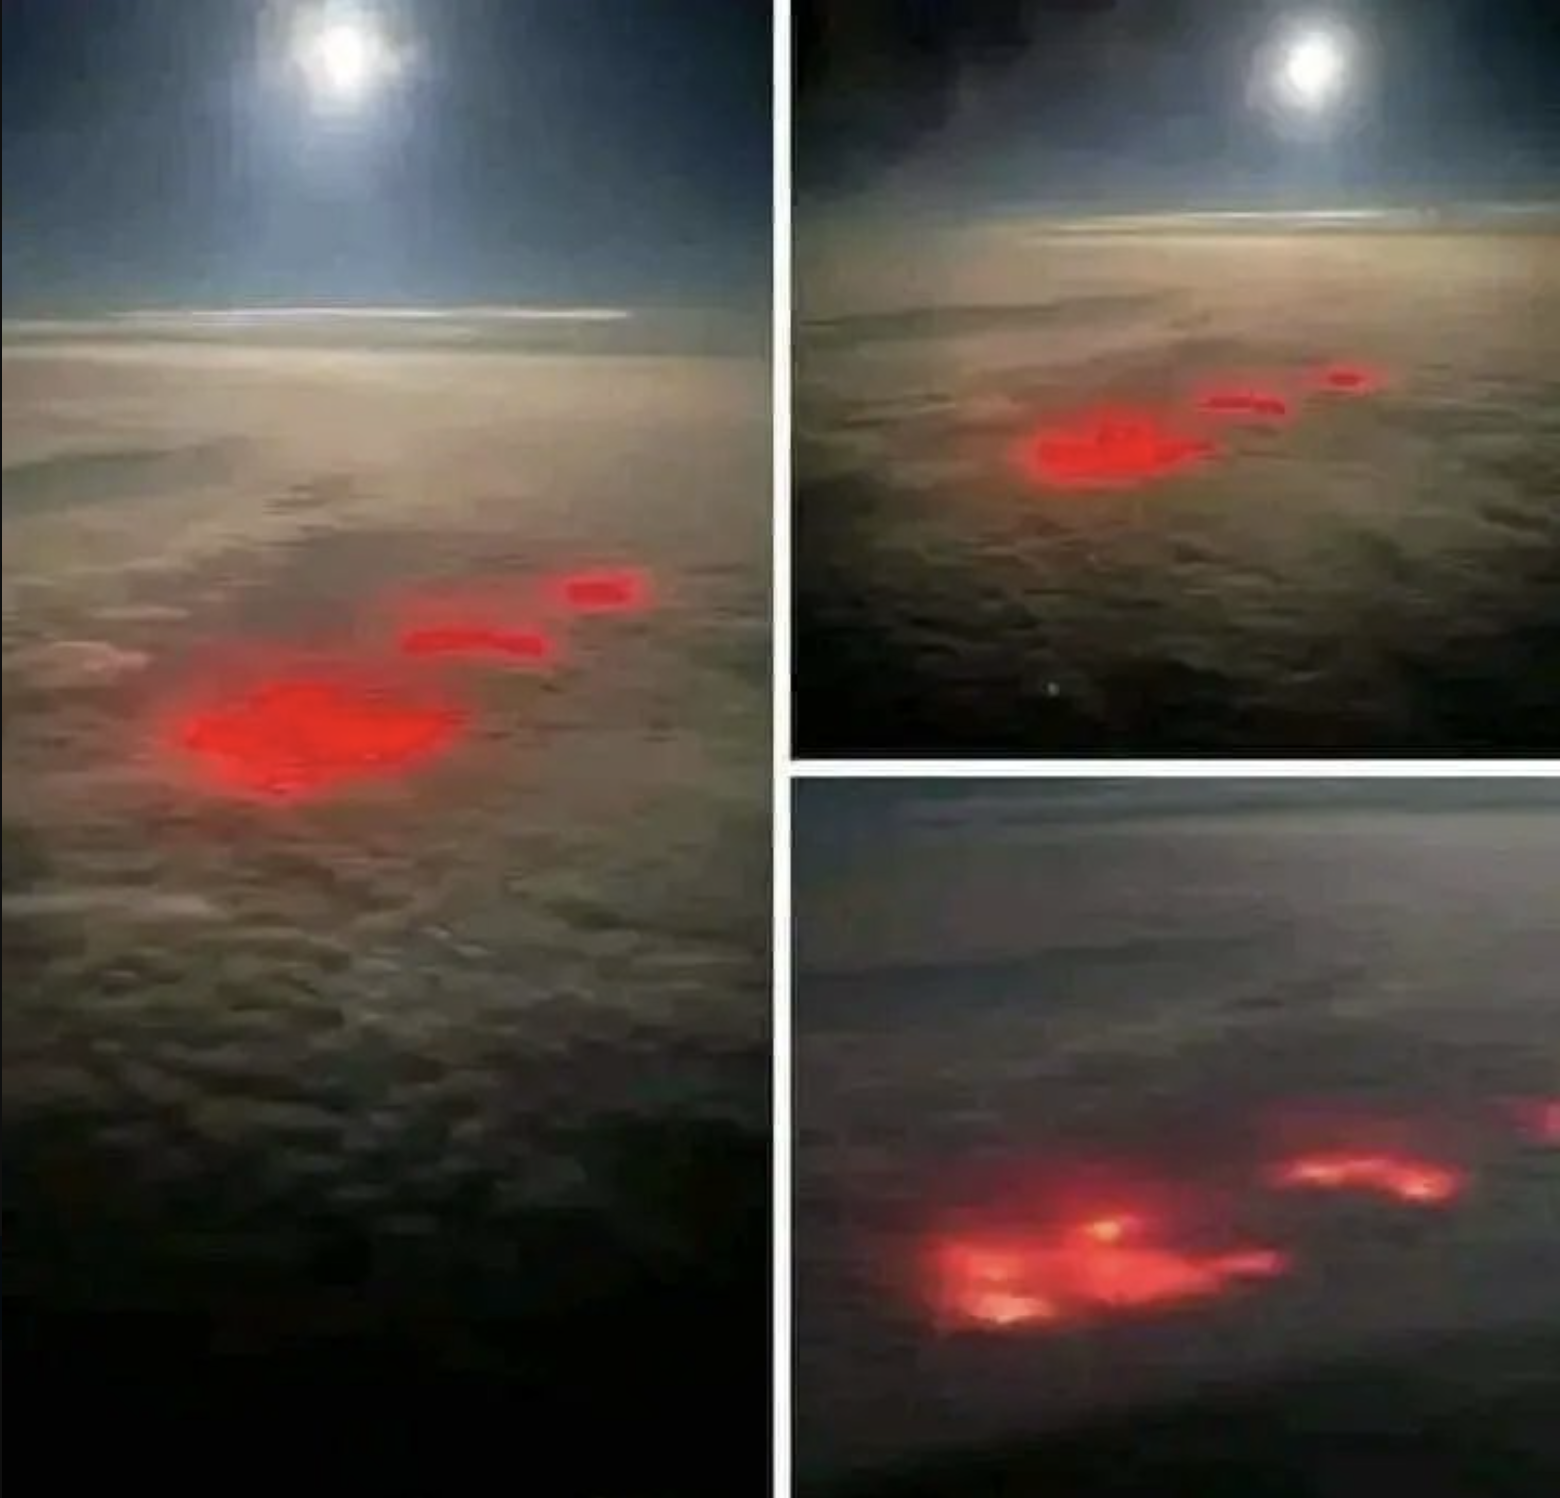 Pilot Photographs Strange Red Glow Over The Atlantic Ocean